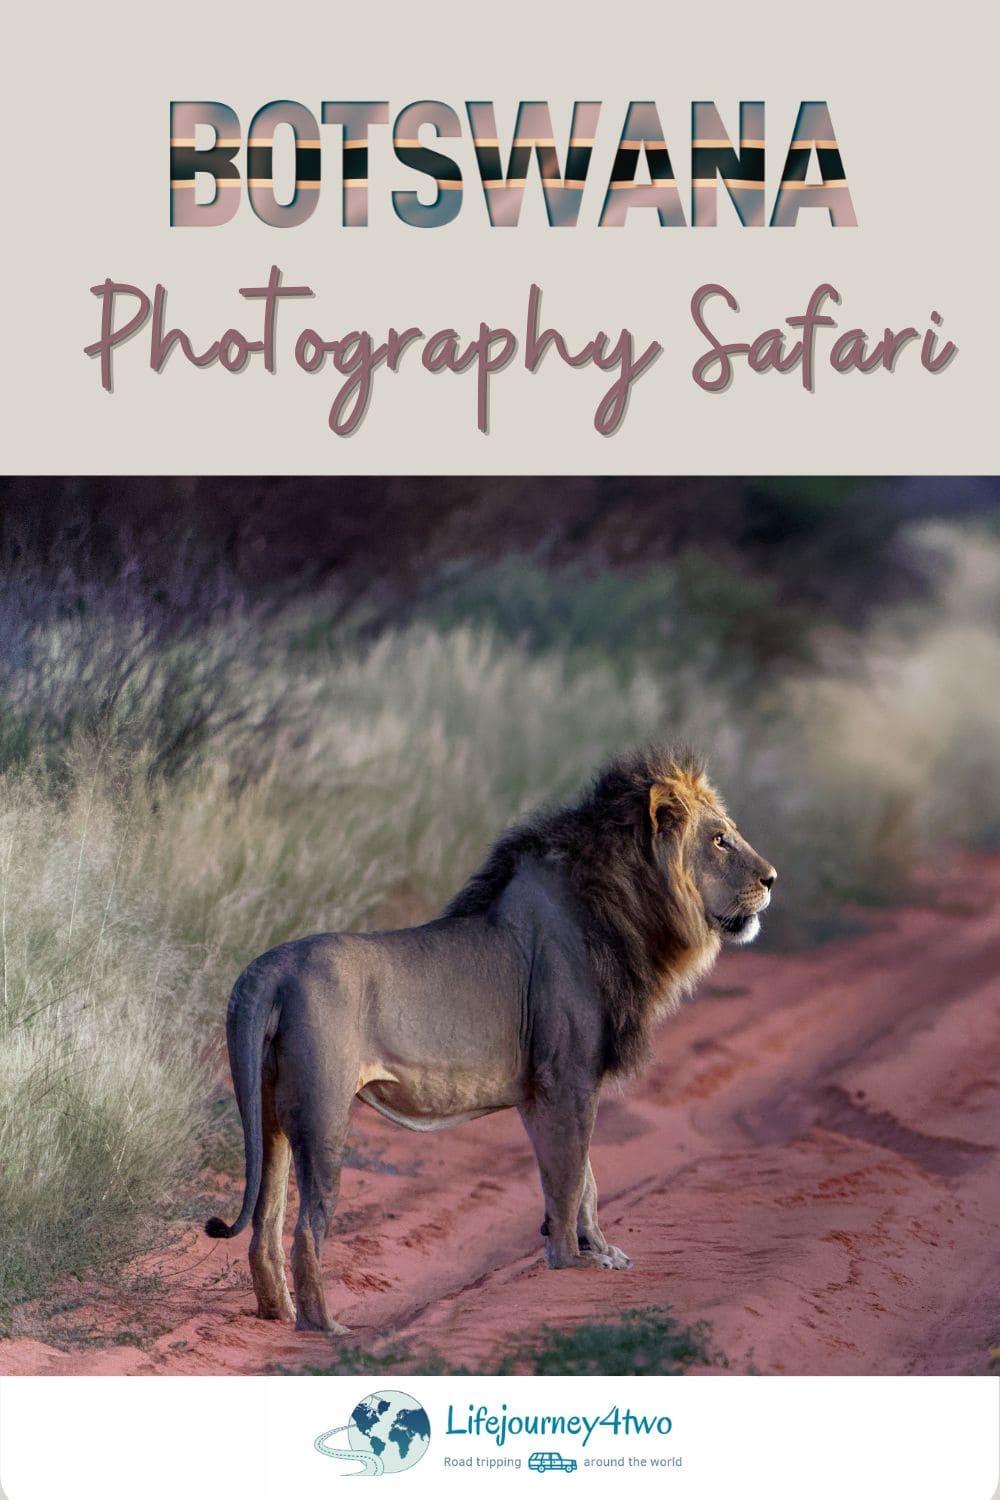 Botswana Photo Safari pinterest pin